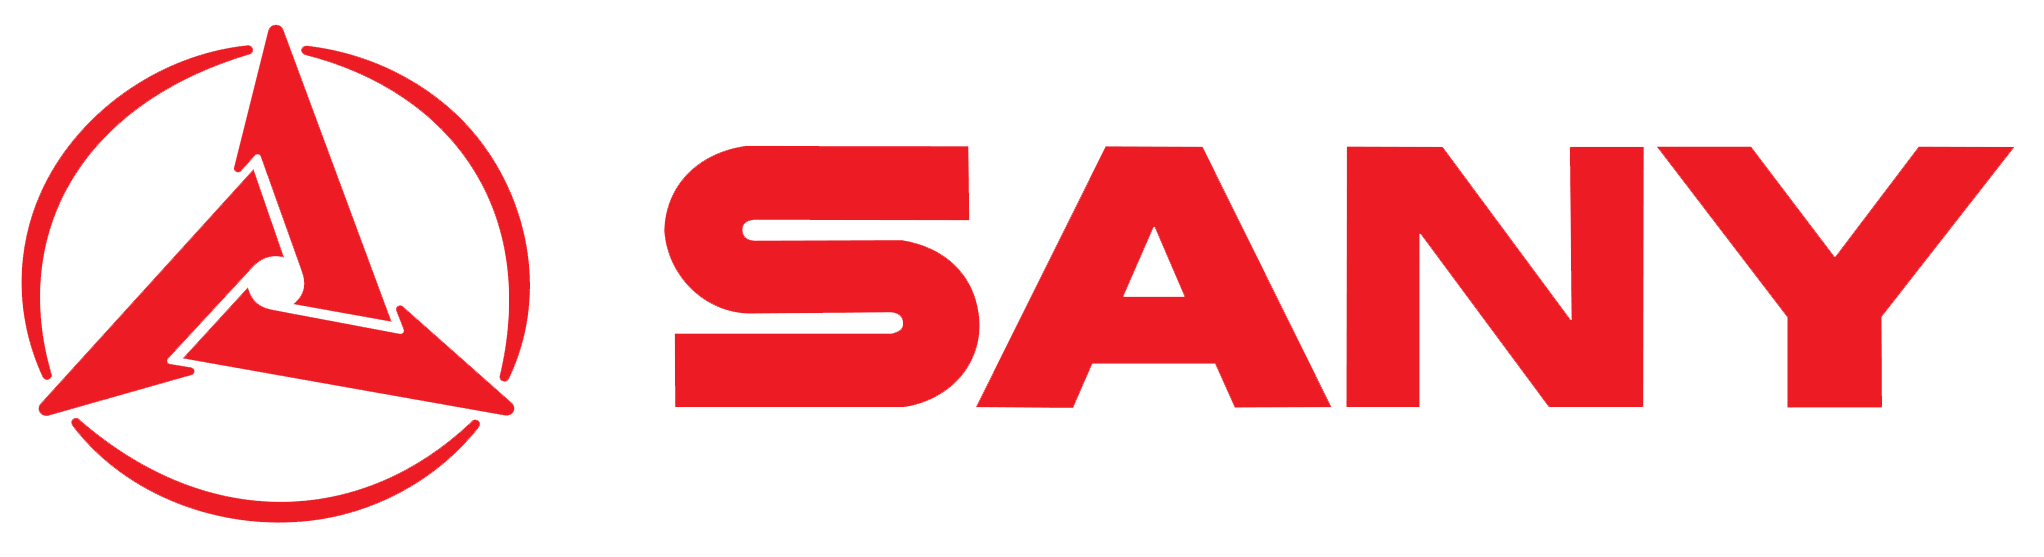 Sany-logo_trasparente